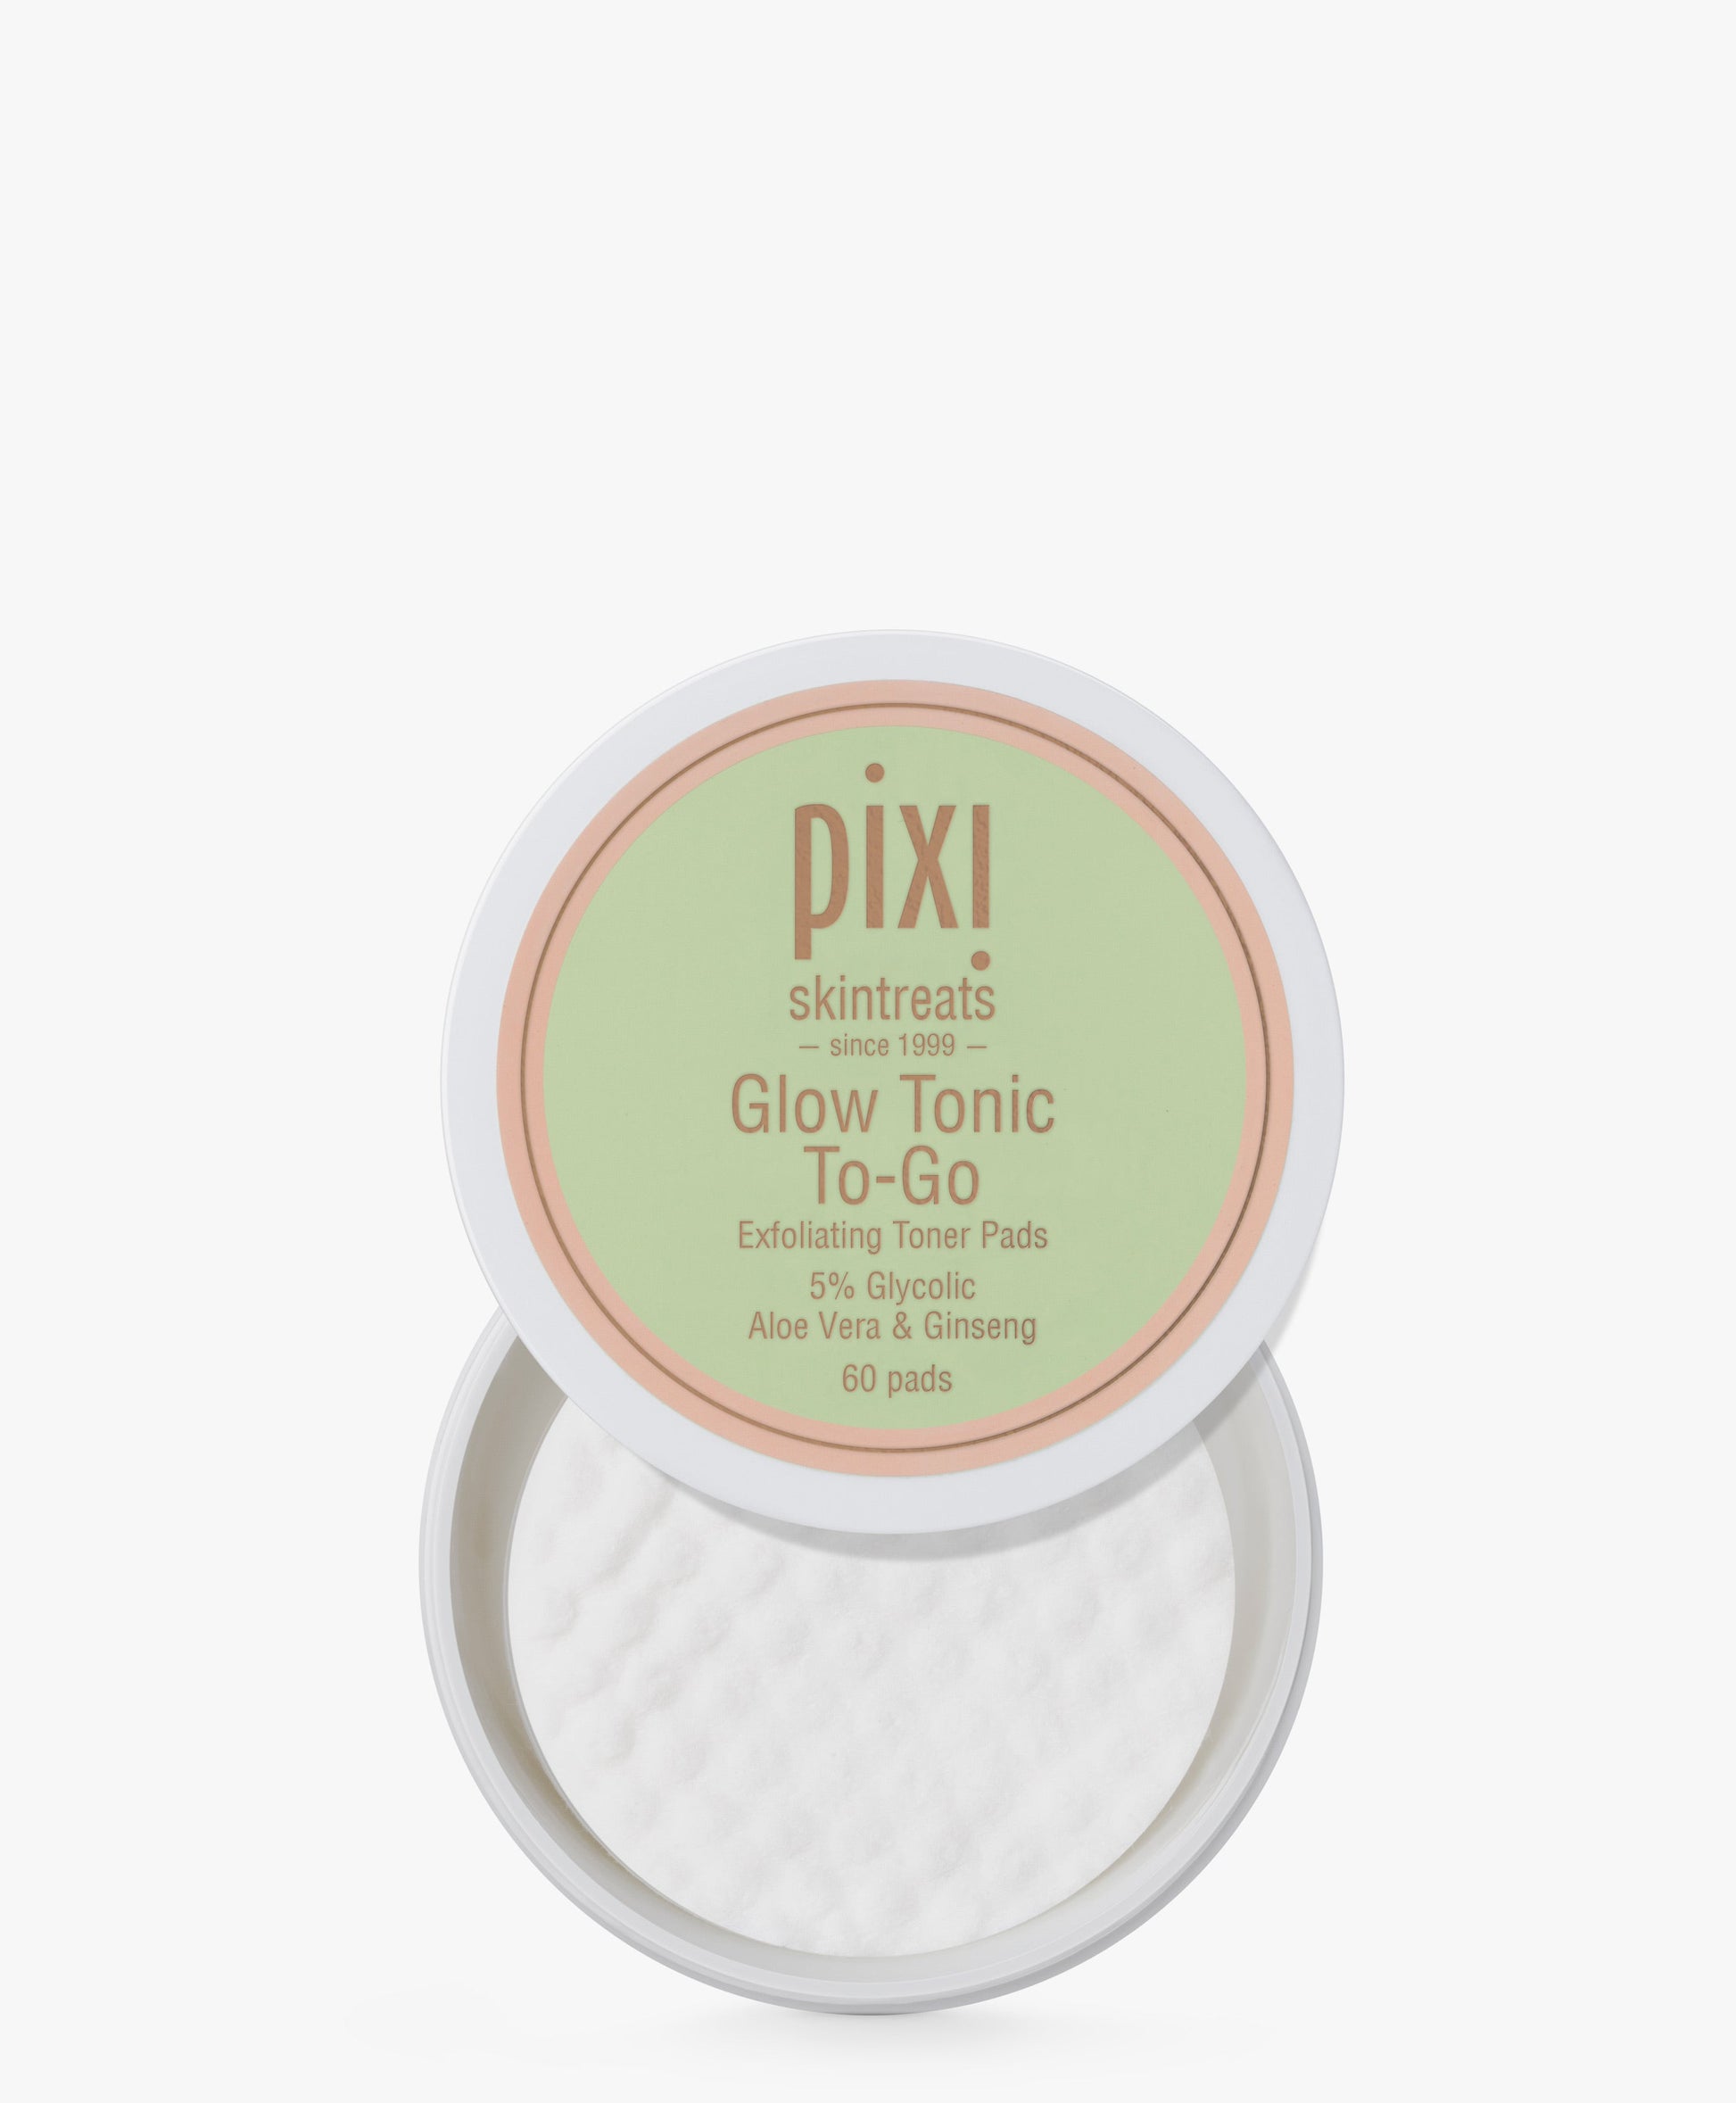 Buy Pixi Glow Tonic To Go - 60 Pads in Pakistan